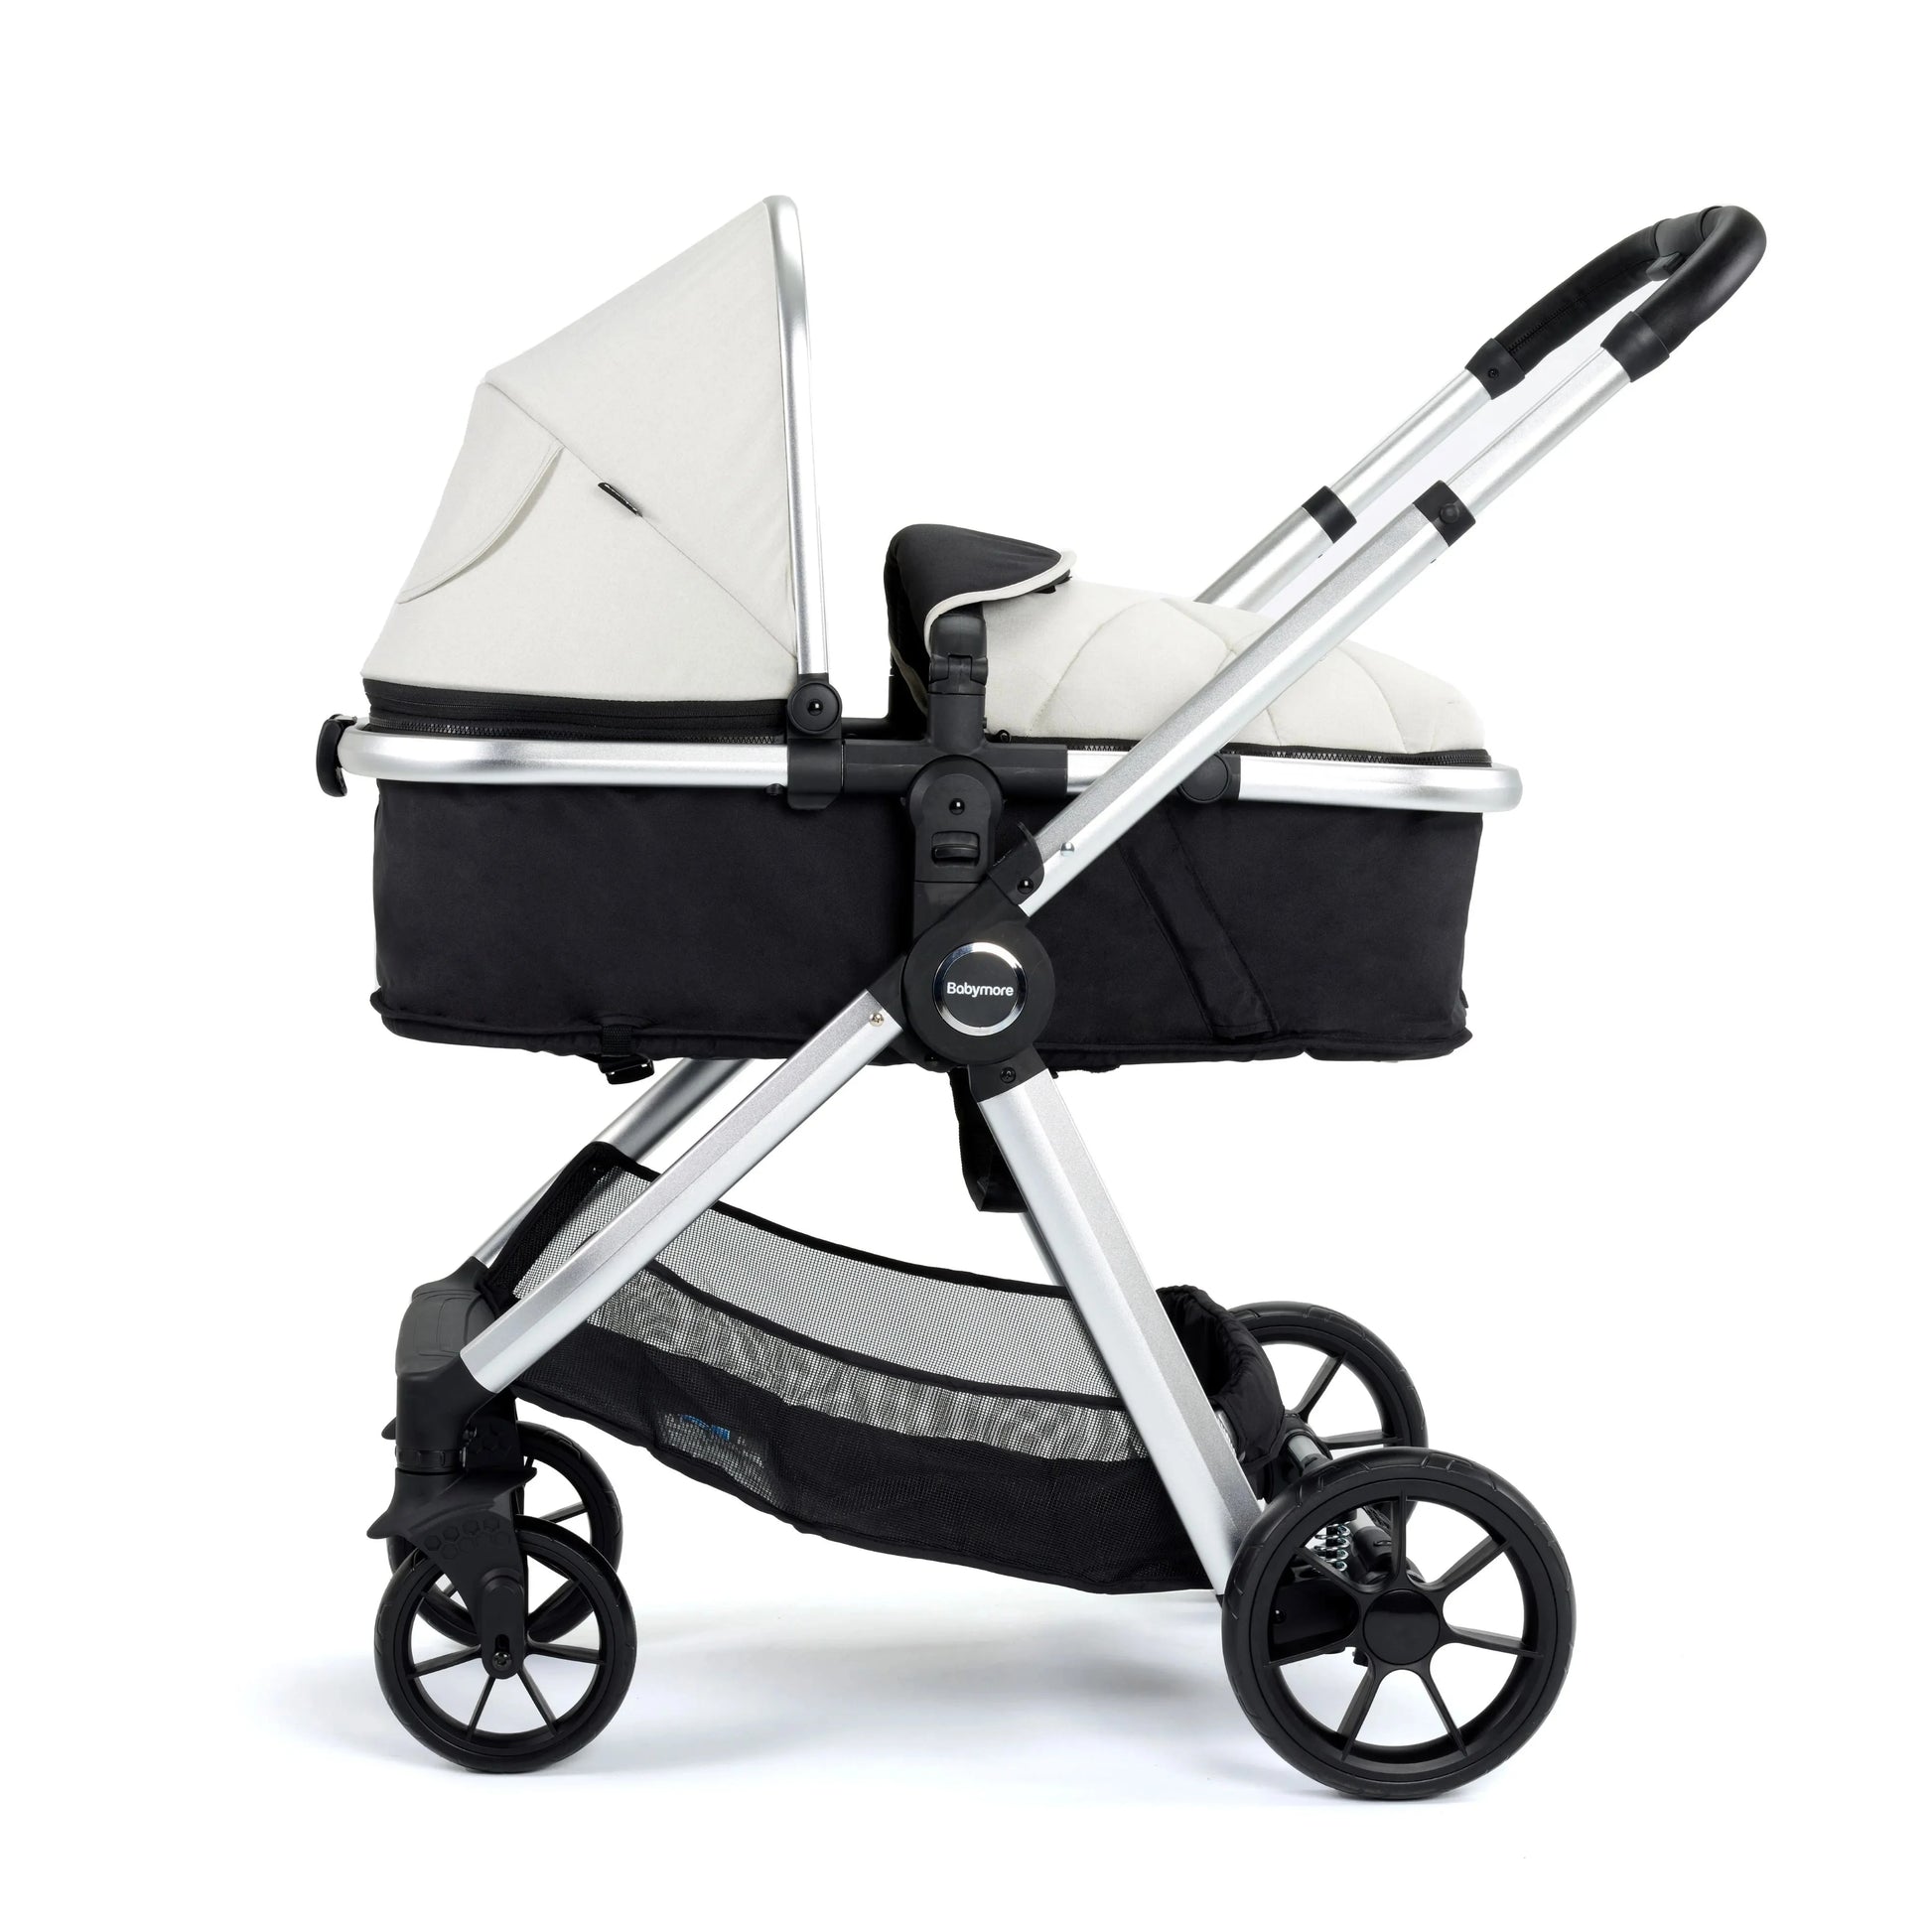 Babymore Mimi Travel System with Pecan i-Size Car Seat amd ISOFIX Base – Silver BabyJoy